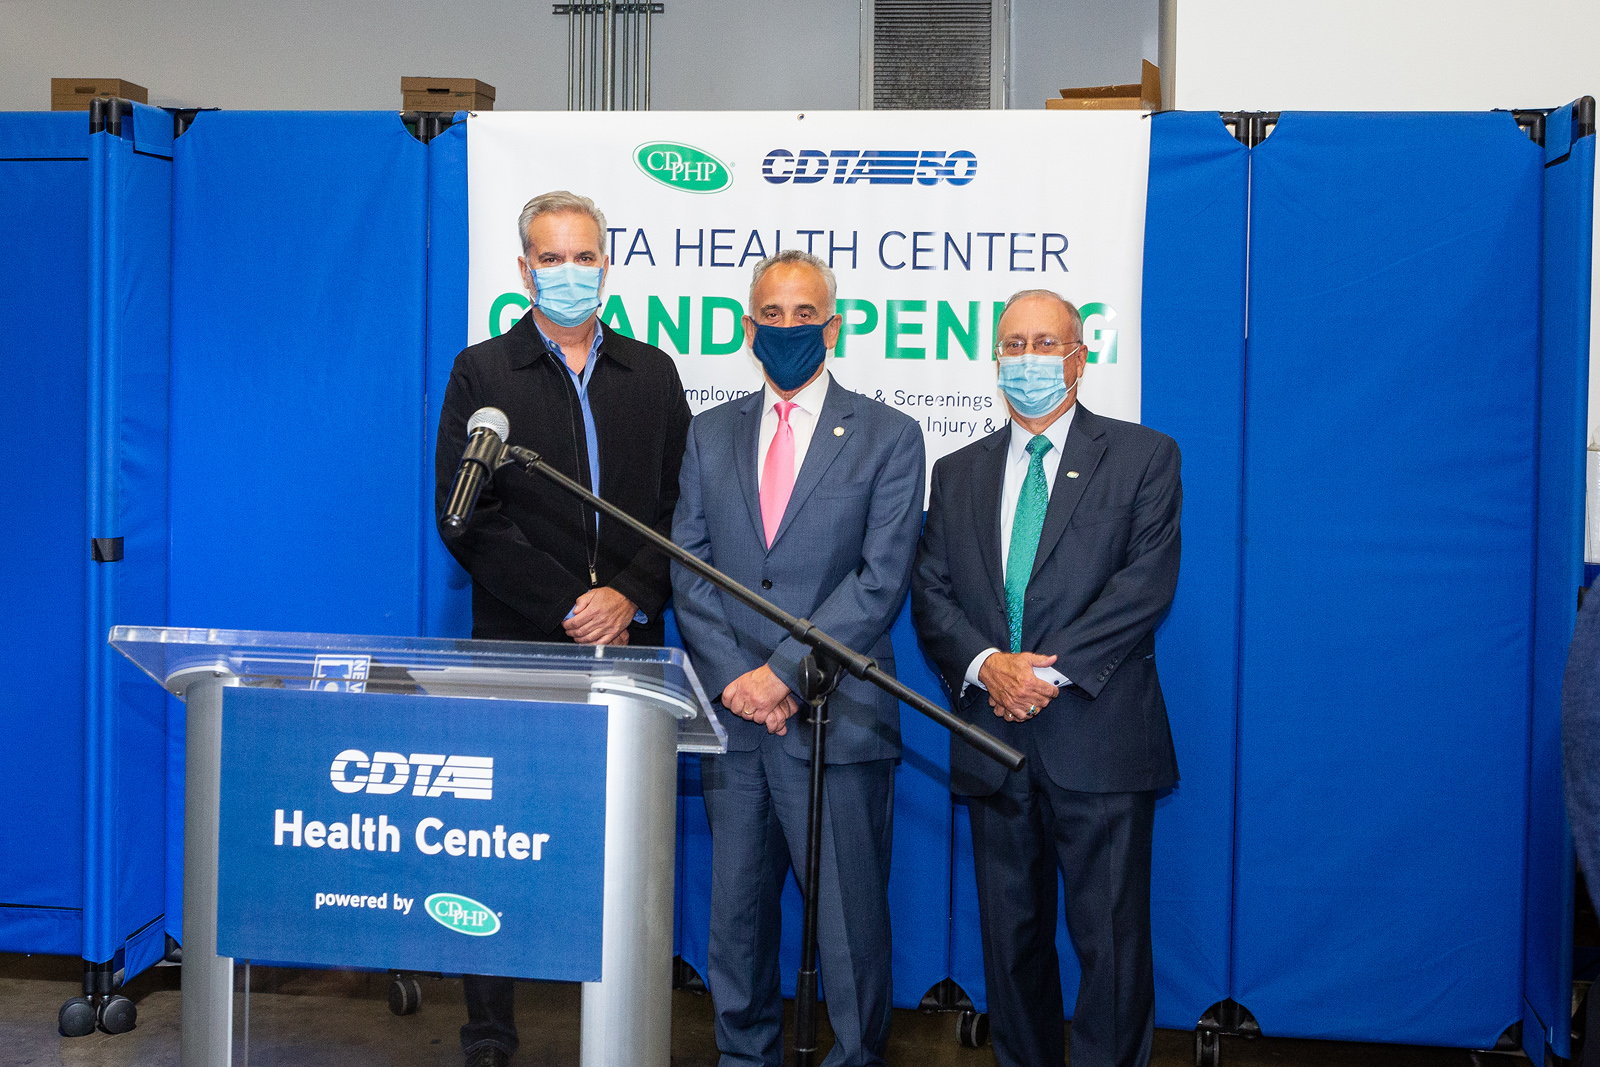 CDTA CDPHP Health Center